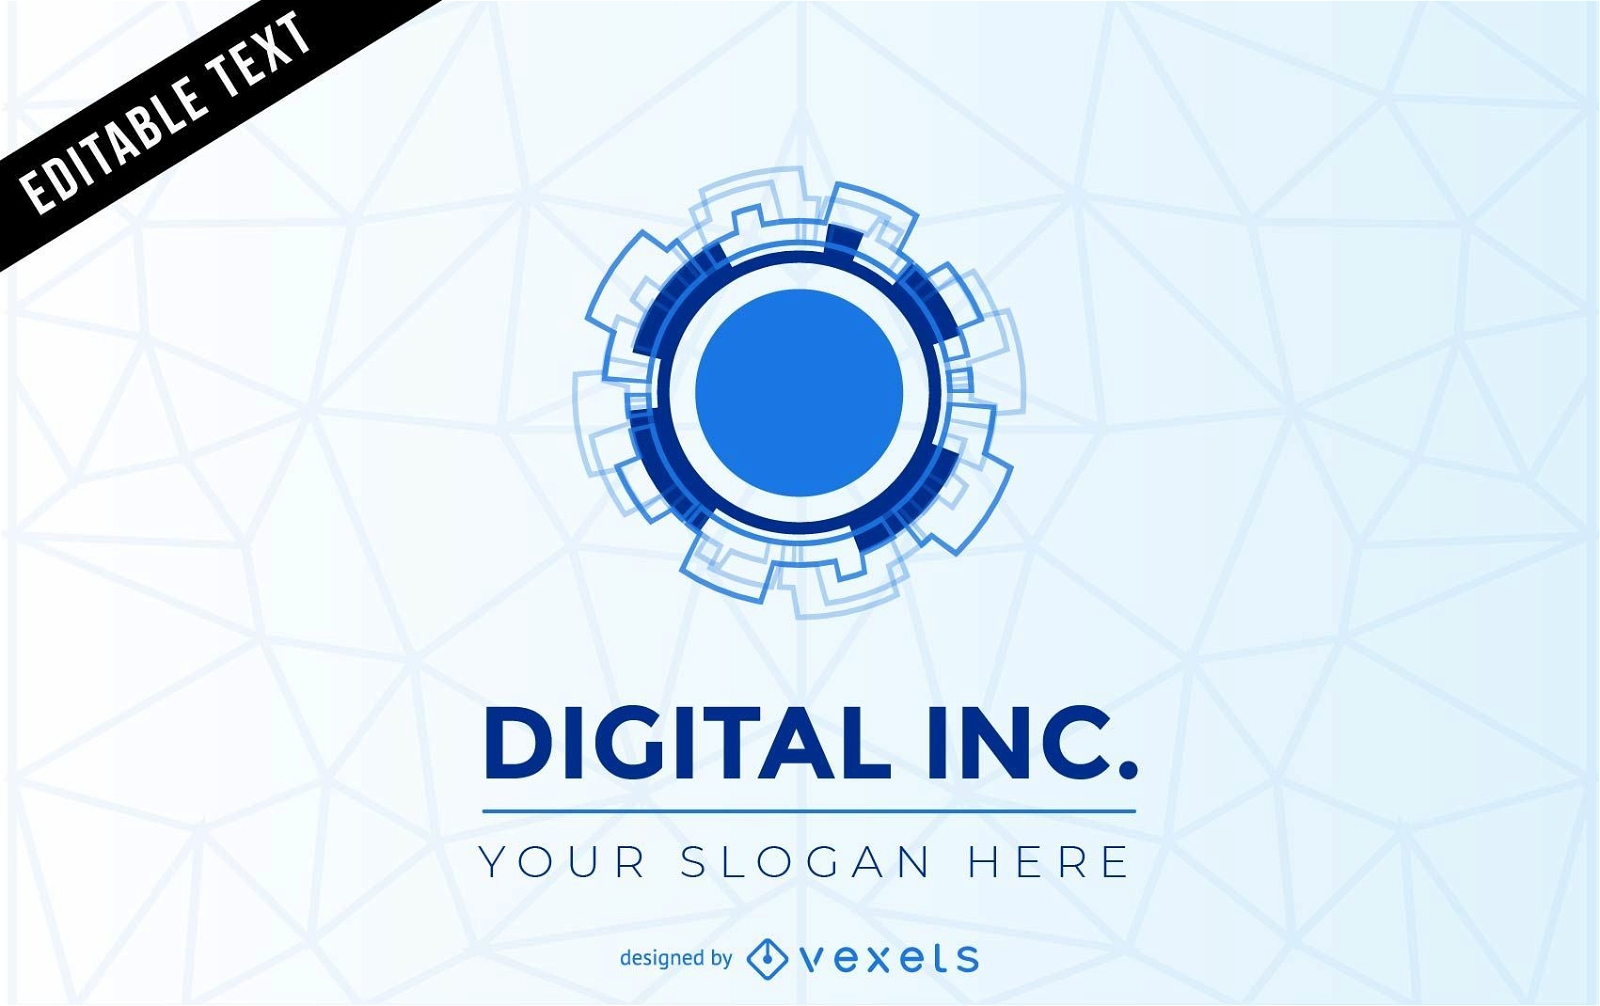 Modelo de logotipo digital inc